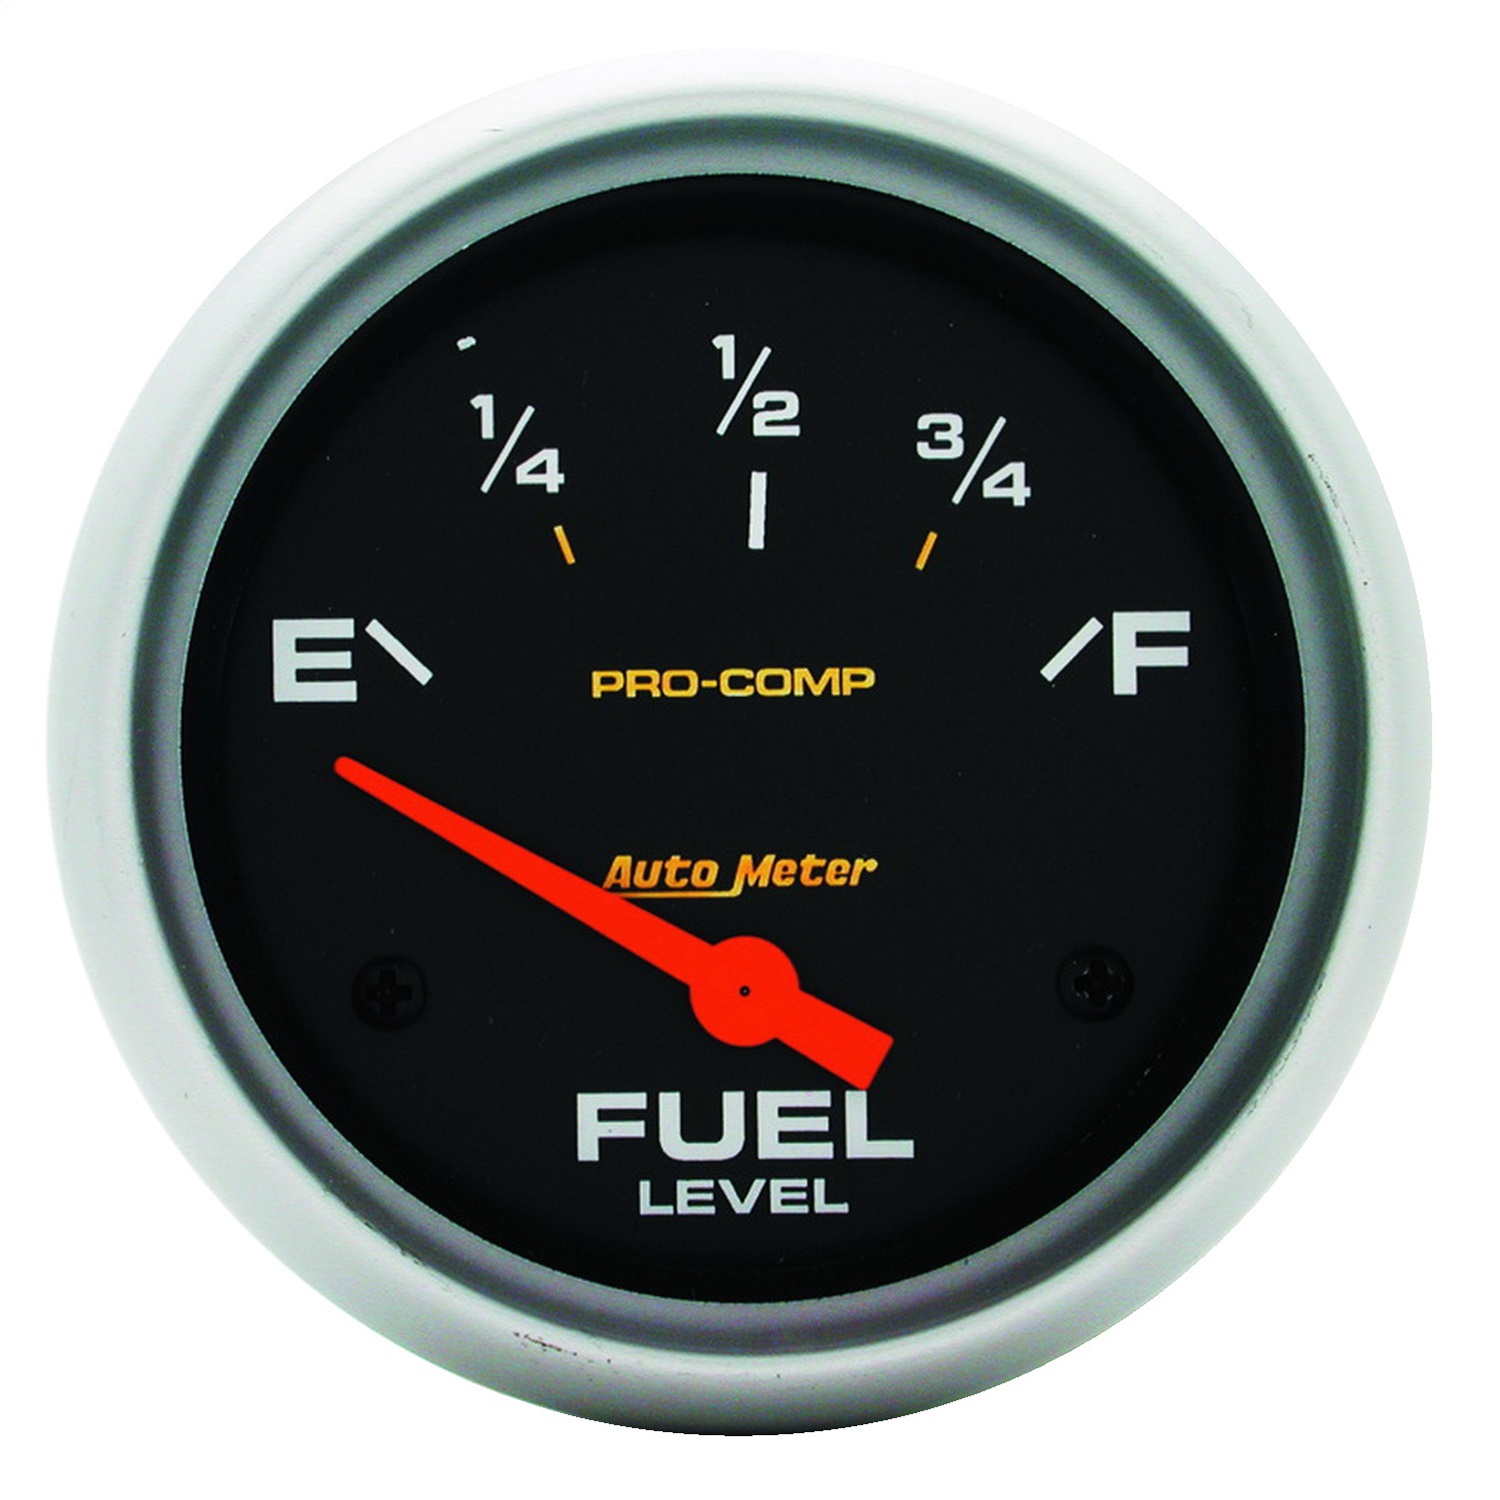 Auto Meter Auto Meter 5415 Pro-Comp; Electric Fuel Level Gauge